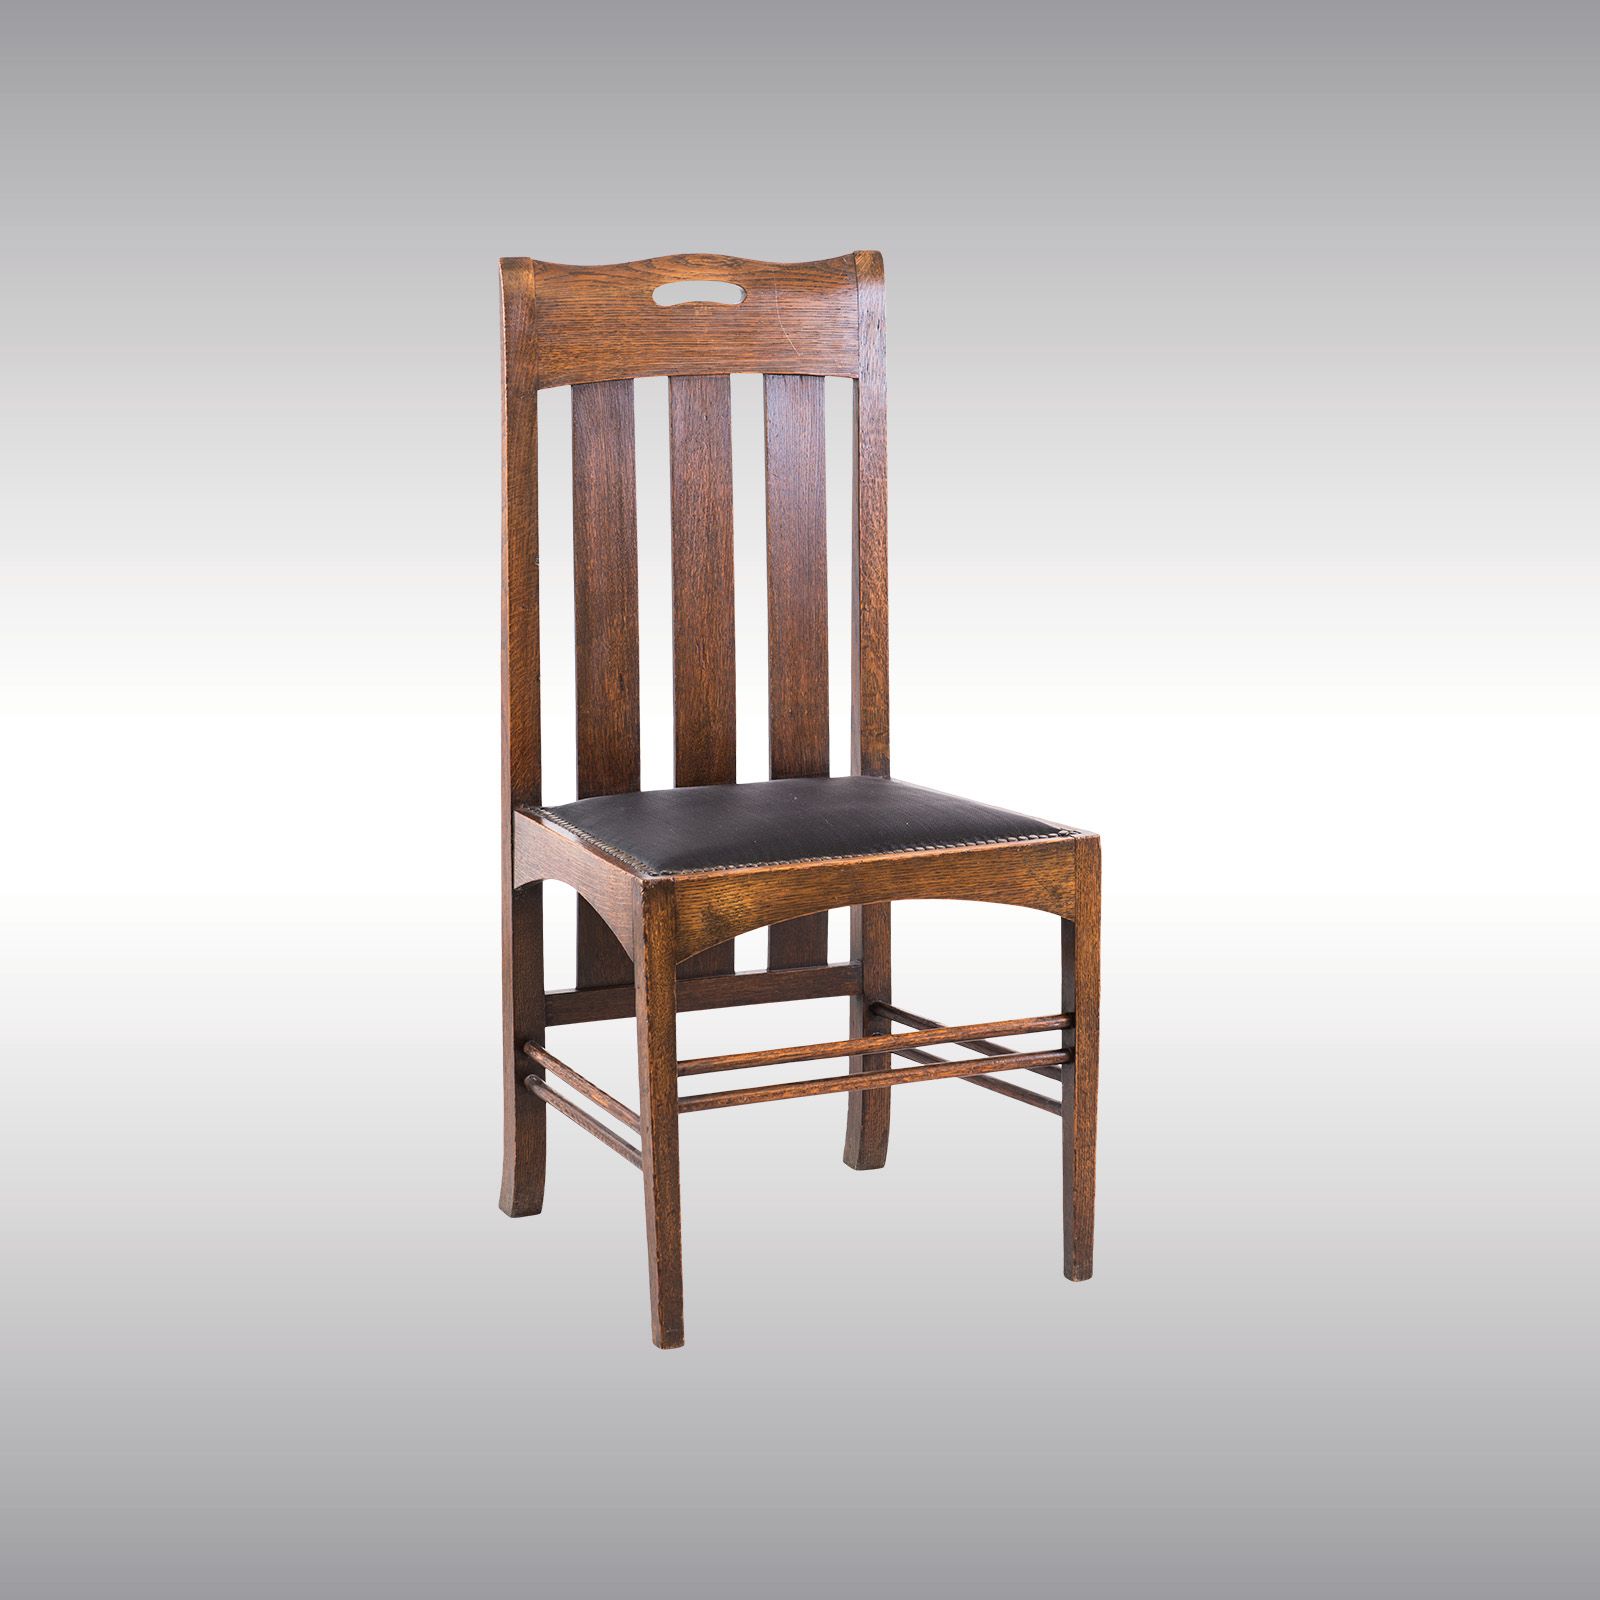 WOKA LAMPS VIENNA - OrderNr.: 50130|Low-Back Chair from the Argyle Street Tea Room Glasgow - Design: Charles Rennie Mackintosh